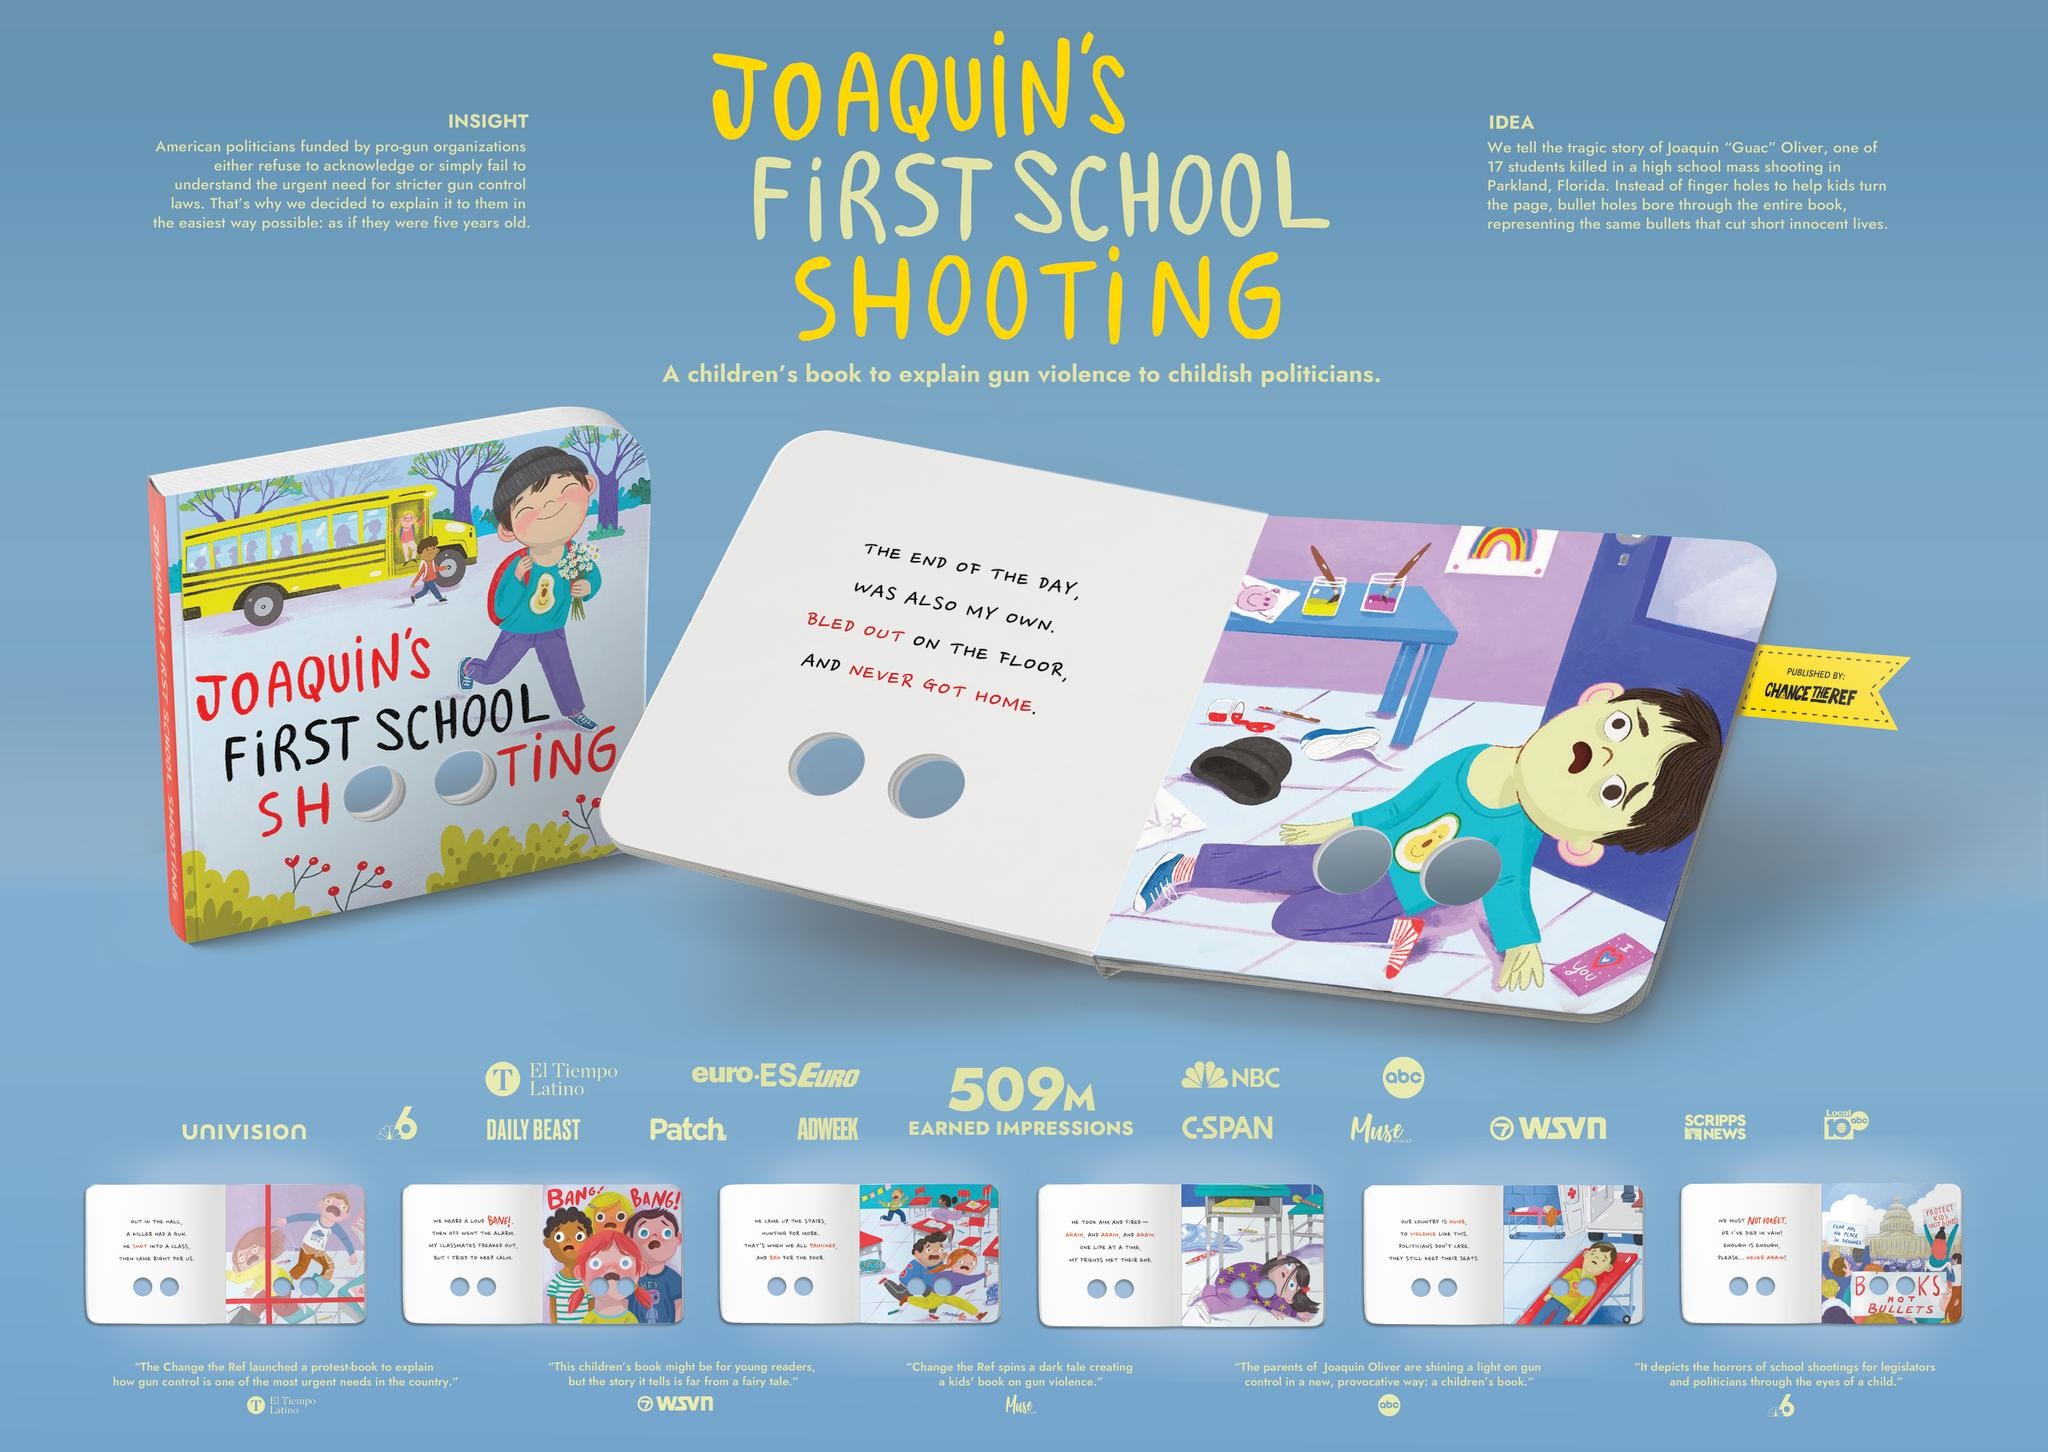 Joaquin’s First School Shooting